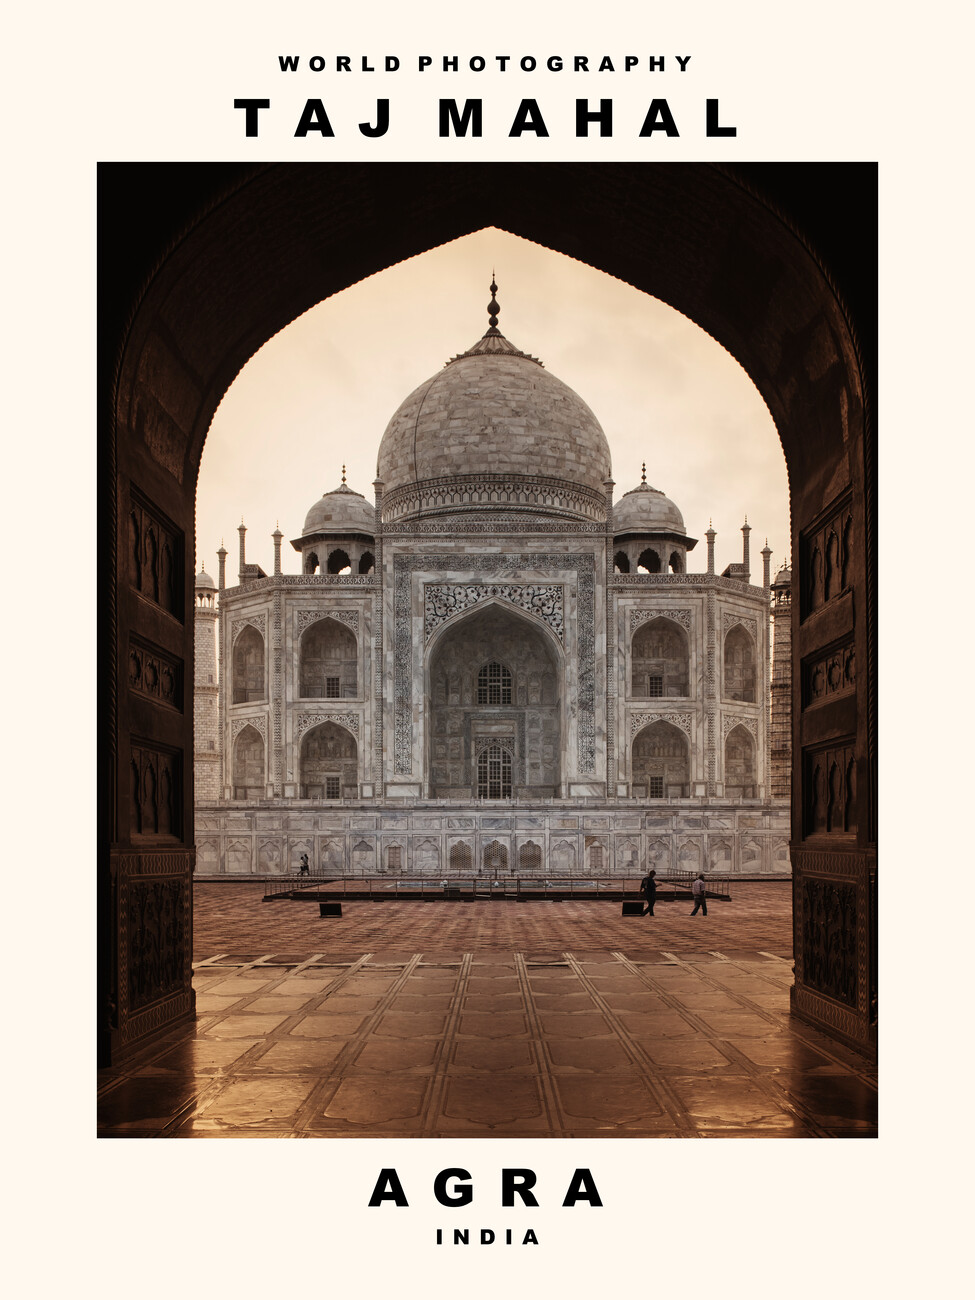 Peter's Obligatory Visit To The Taj Mahal | Peter's Big Adventure